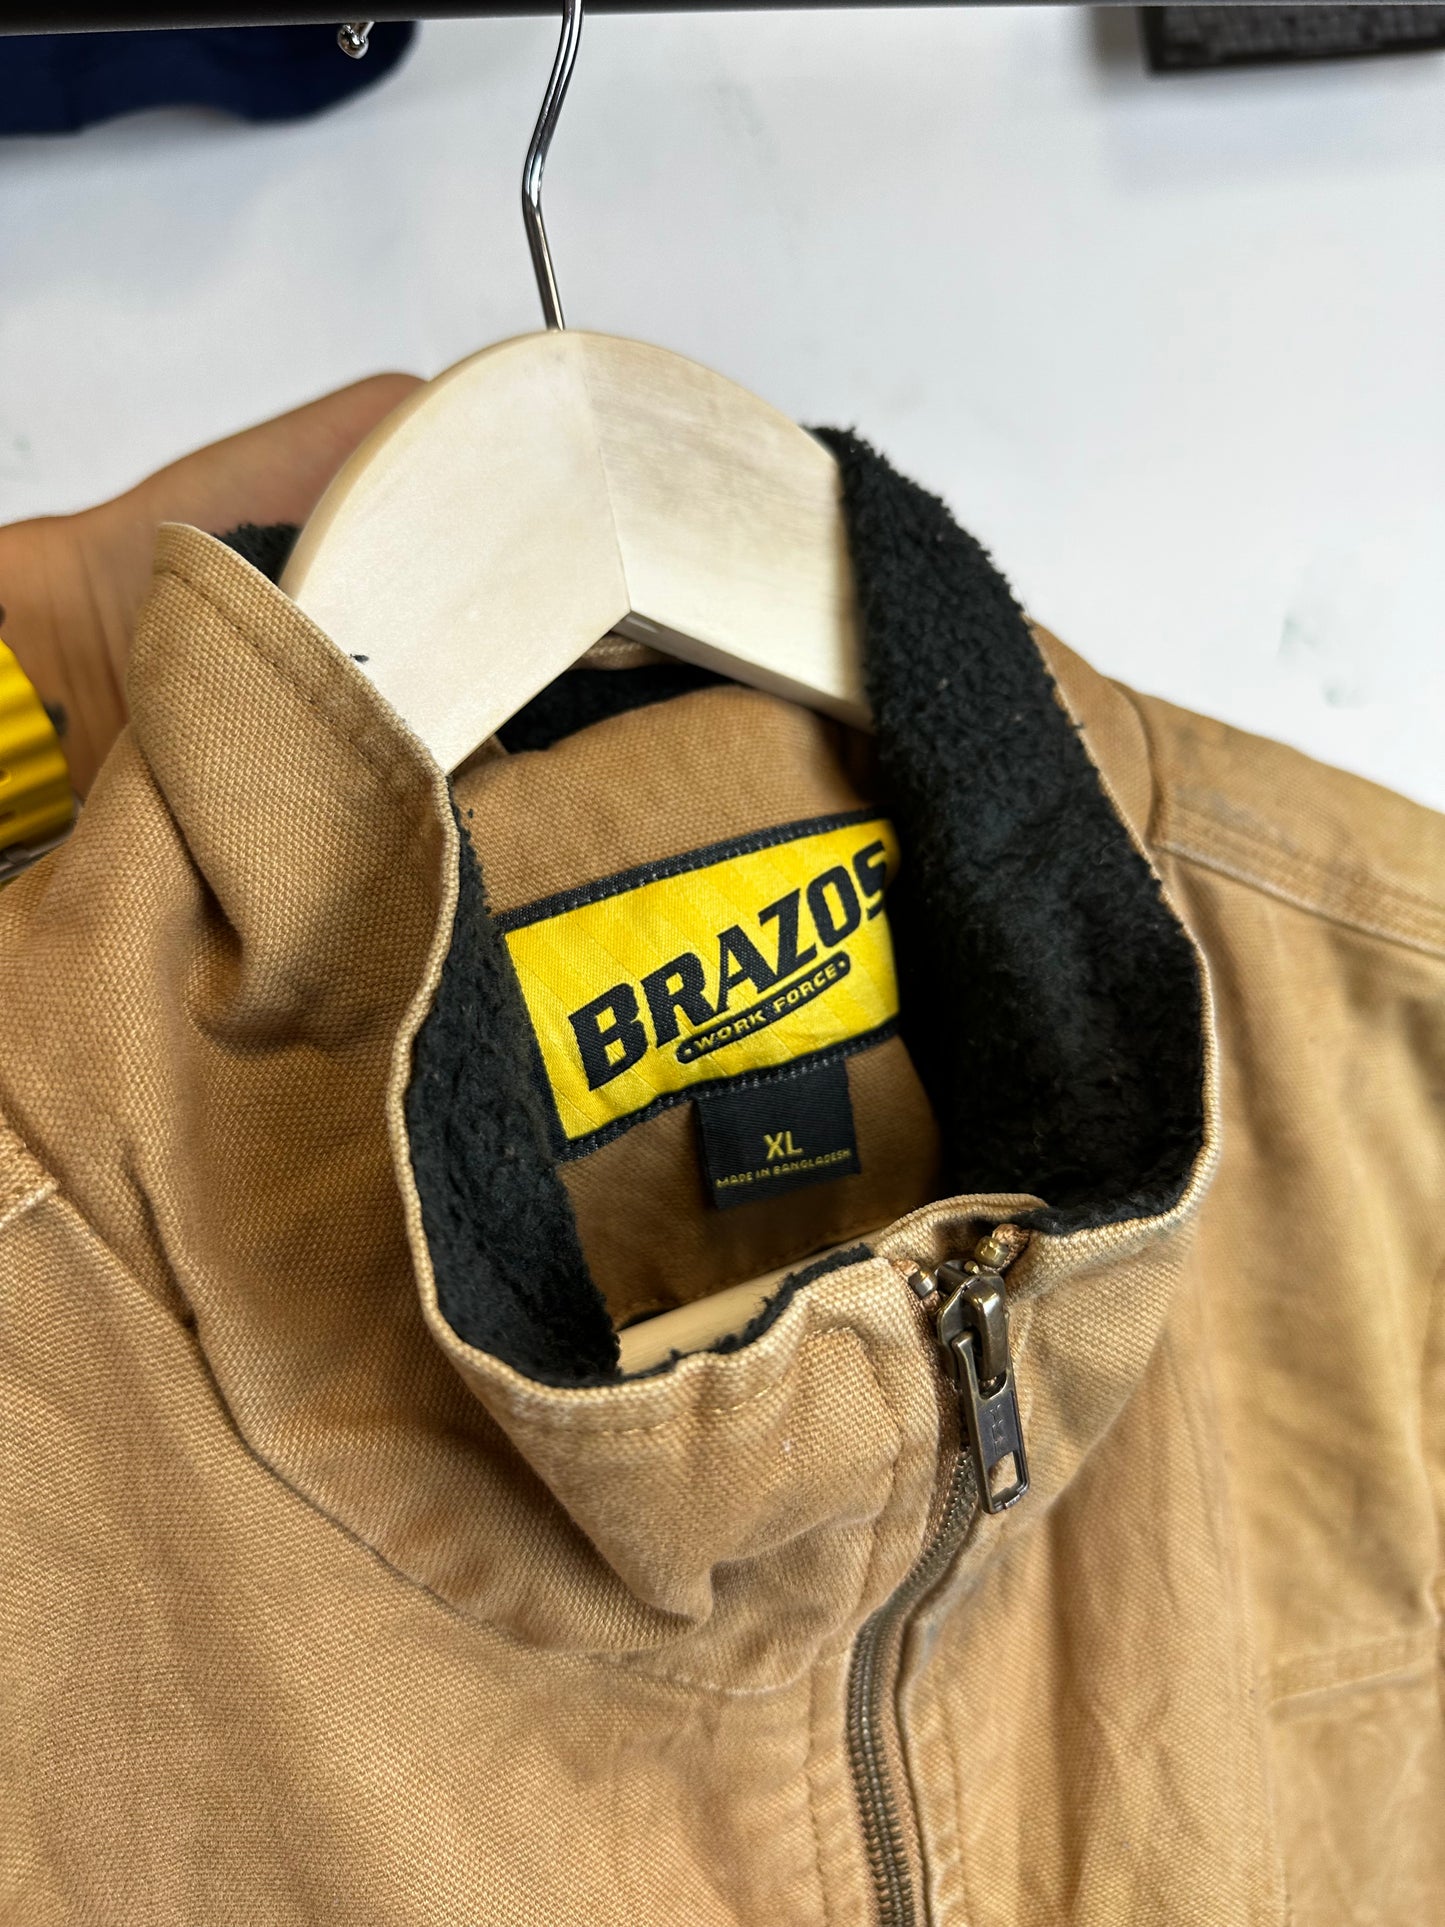 Vintage Brazos vest - size XL